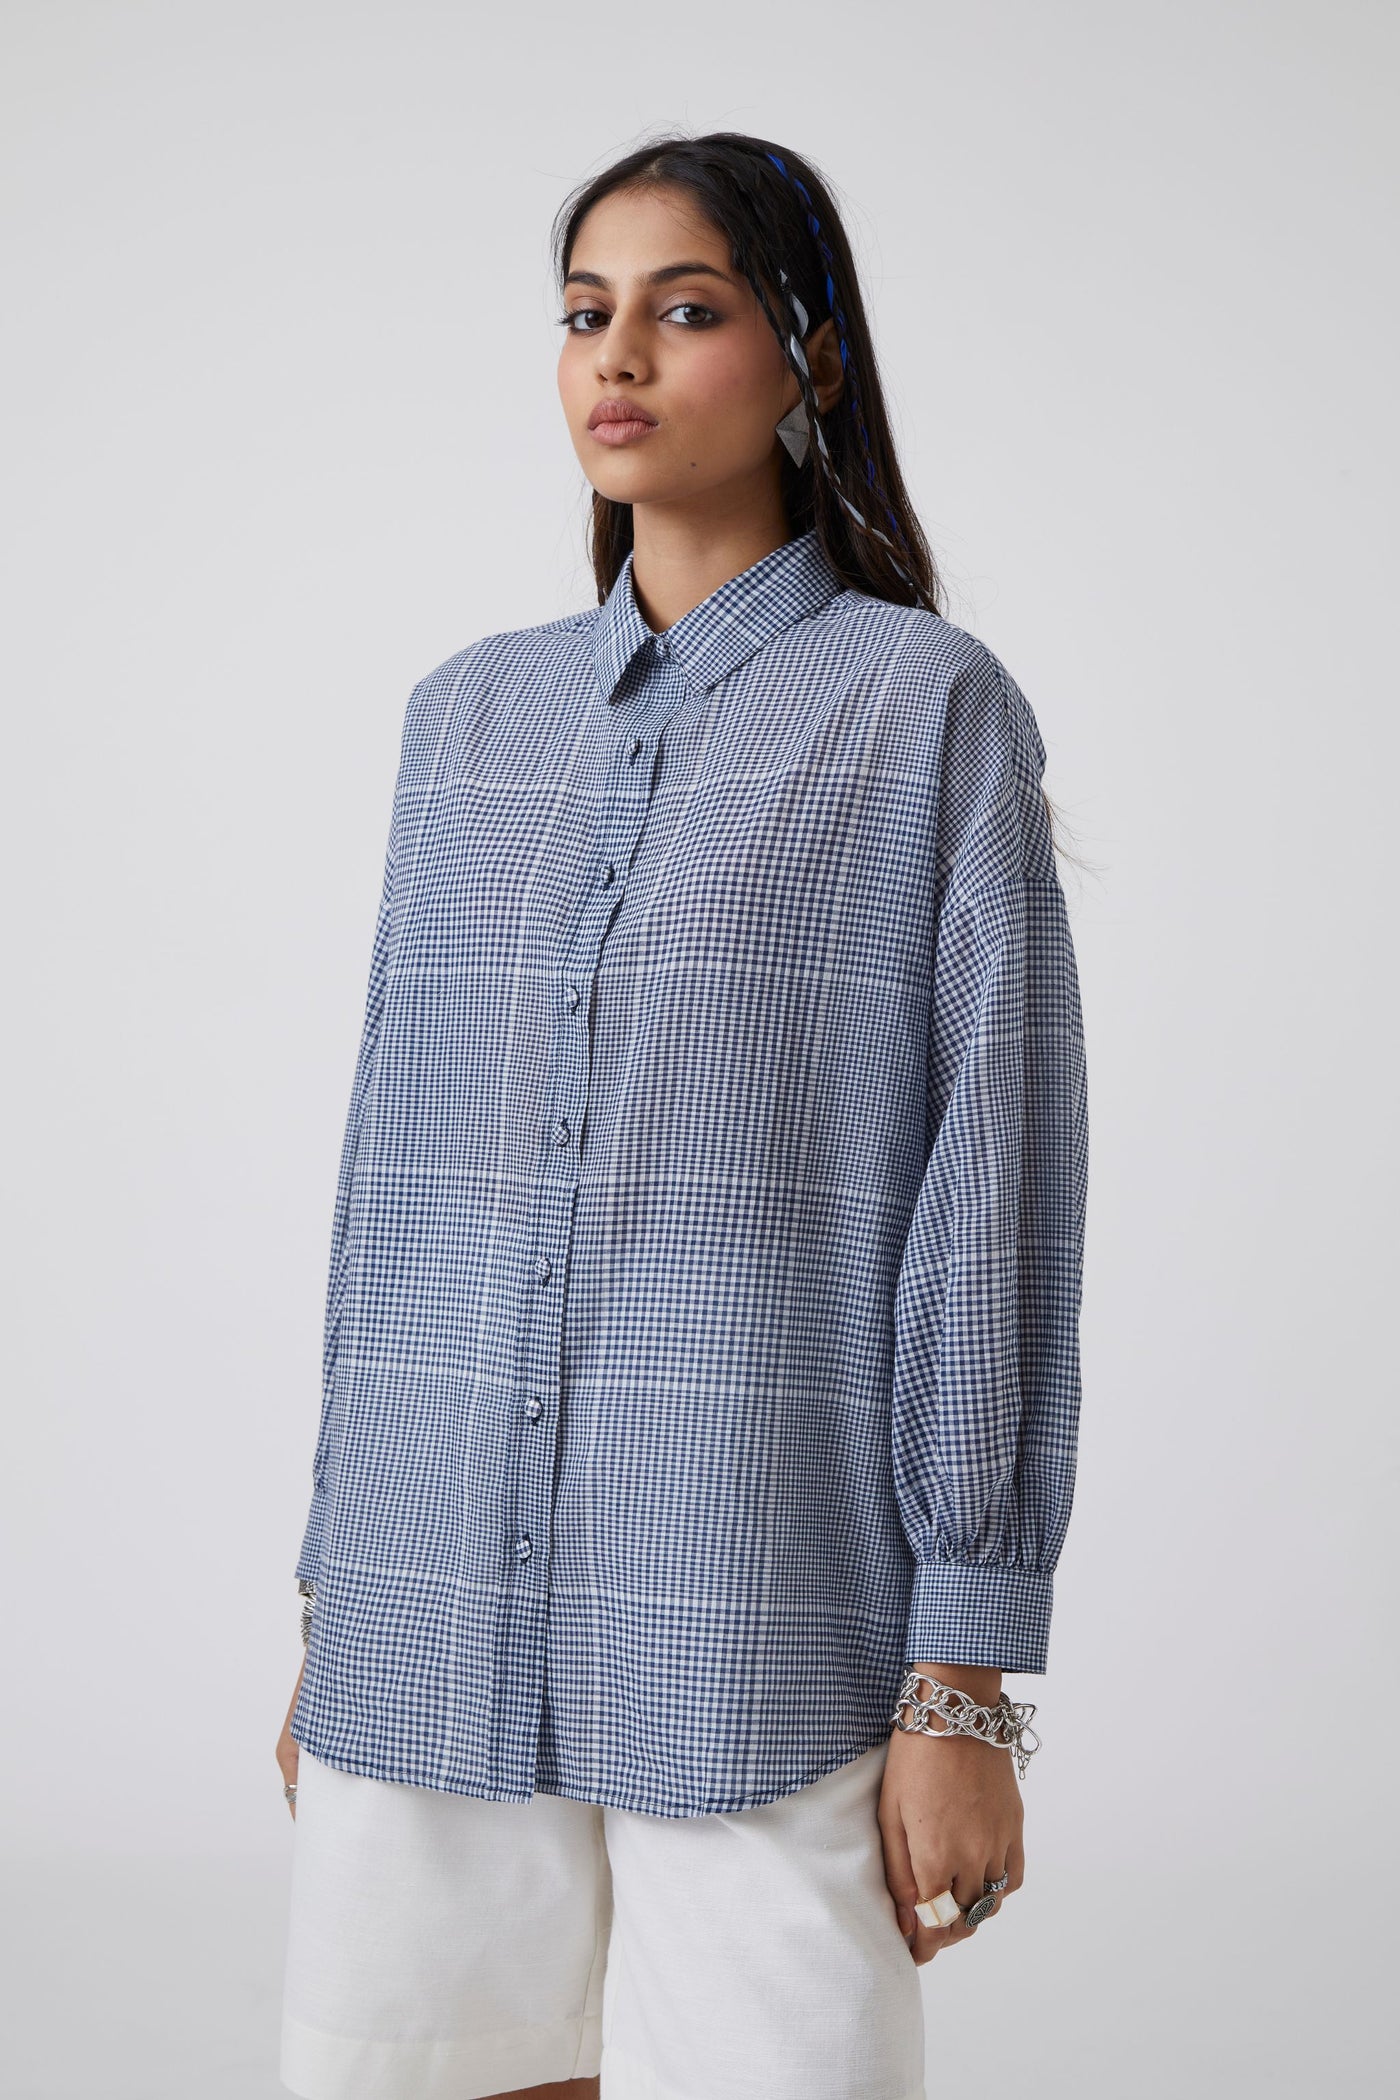 Ryuk Gingham Formal Shirt | Full Sleeve Relaxed Shirt with Slim Collar | Handwoven Cotton